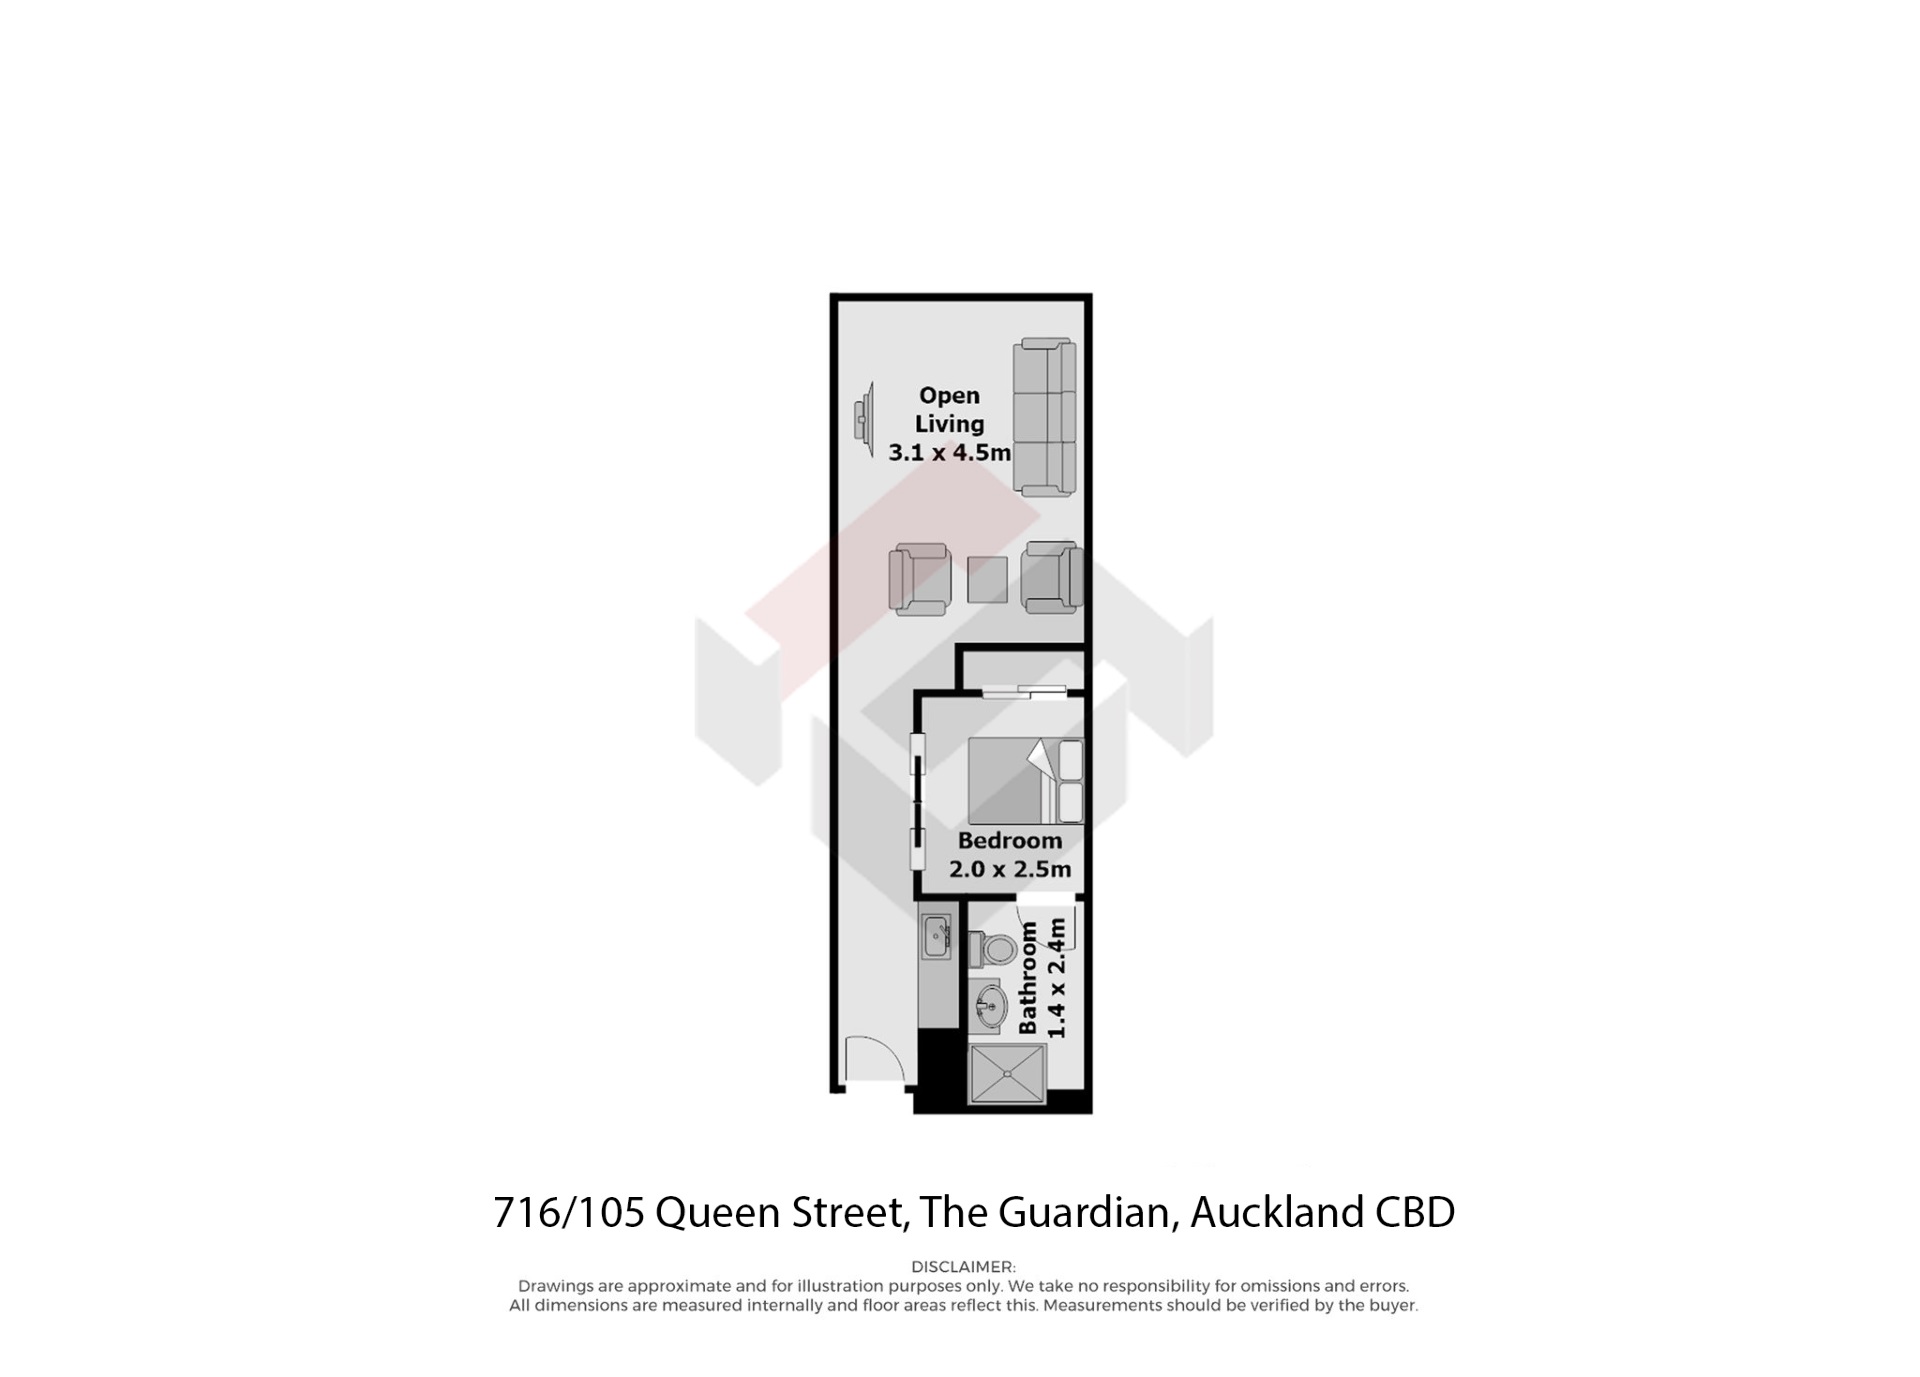 Floorplan | 105 Queen Street, City Centre | Apartment Specialists